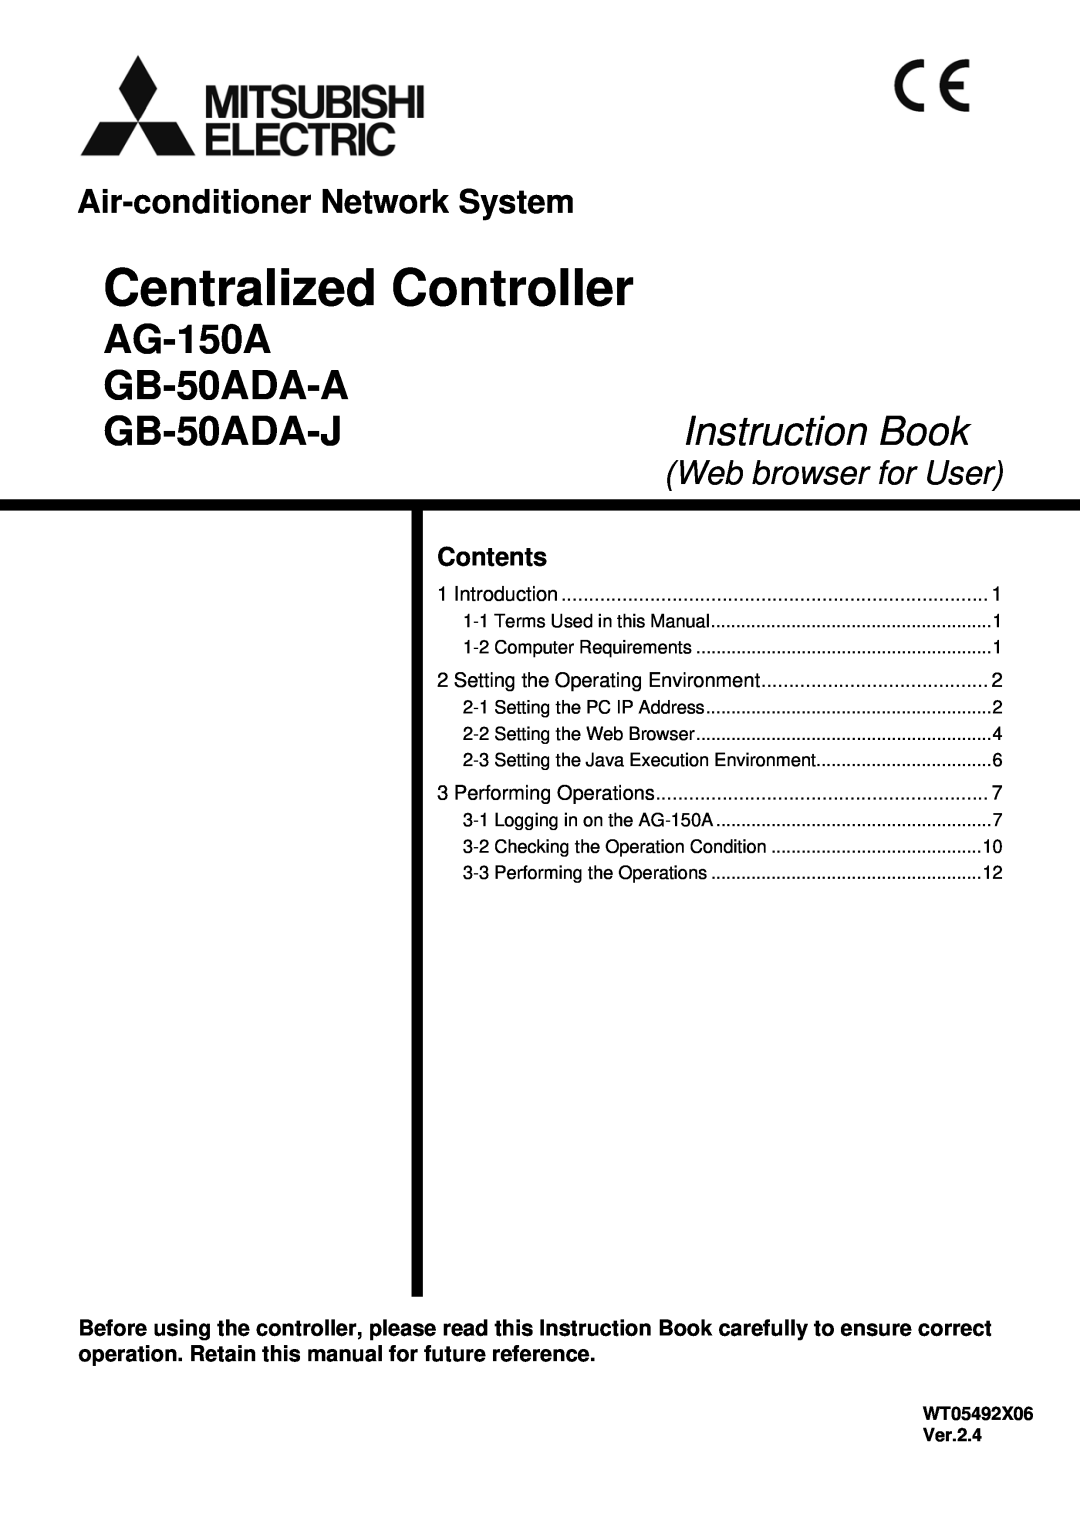 Mitsubishi Electronics GB-50ADA-A manual Centralized Controller, AG-150A, GB-50ADA-J, Instruction Book, Contents 